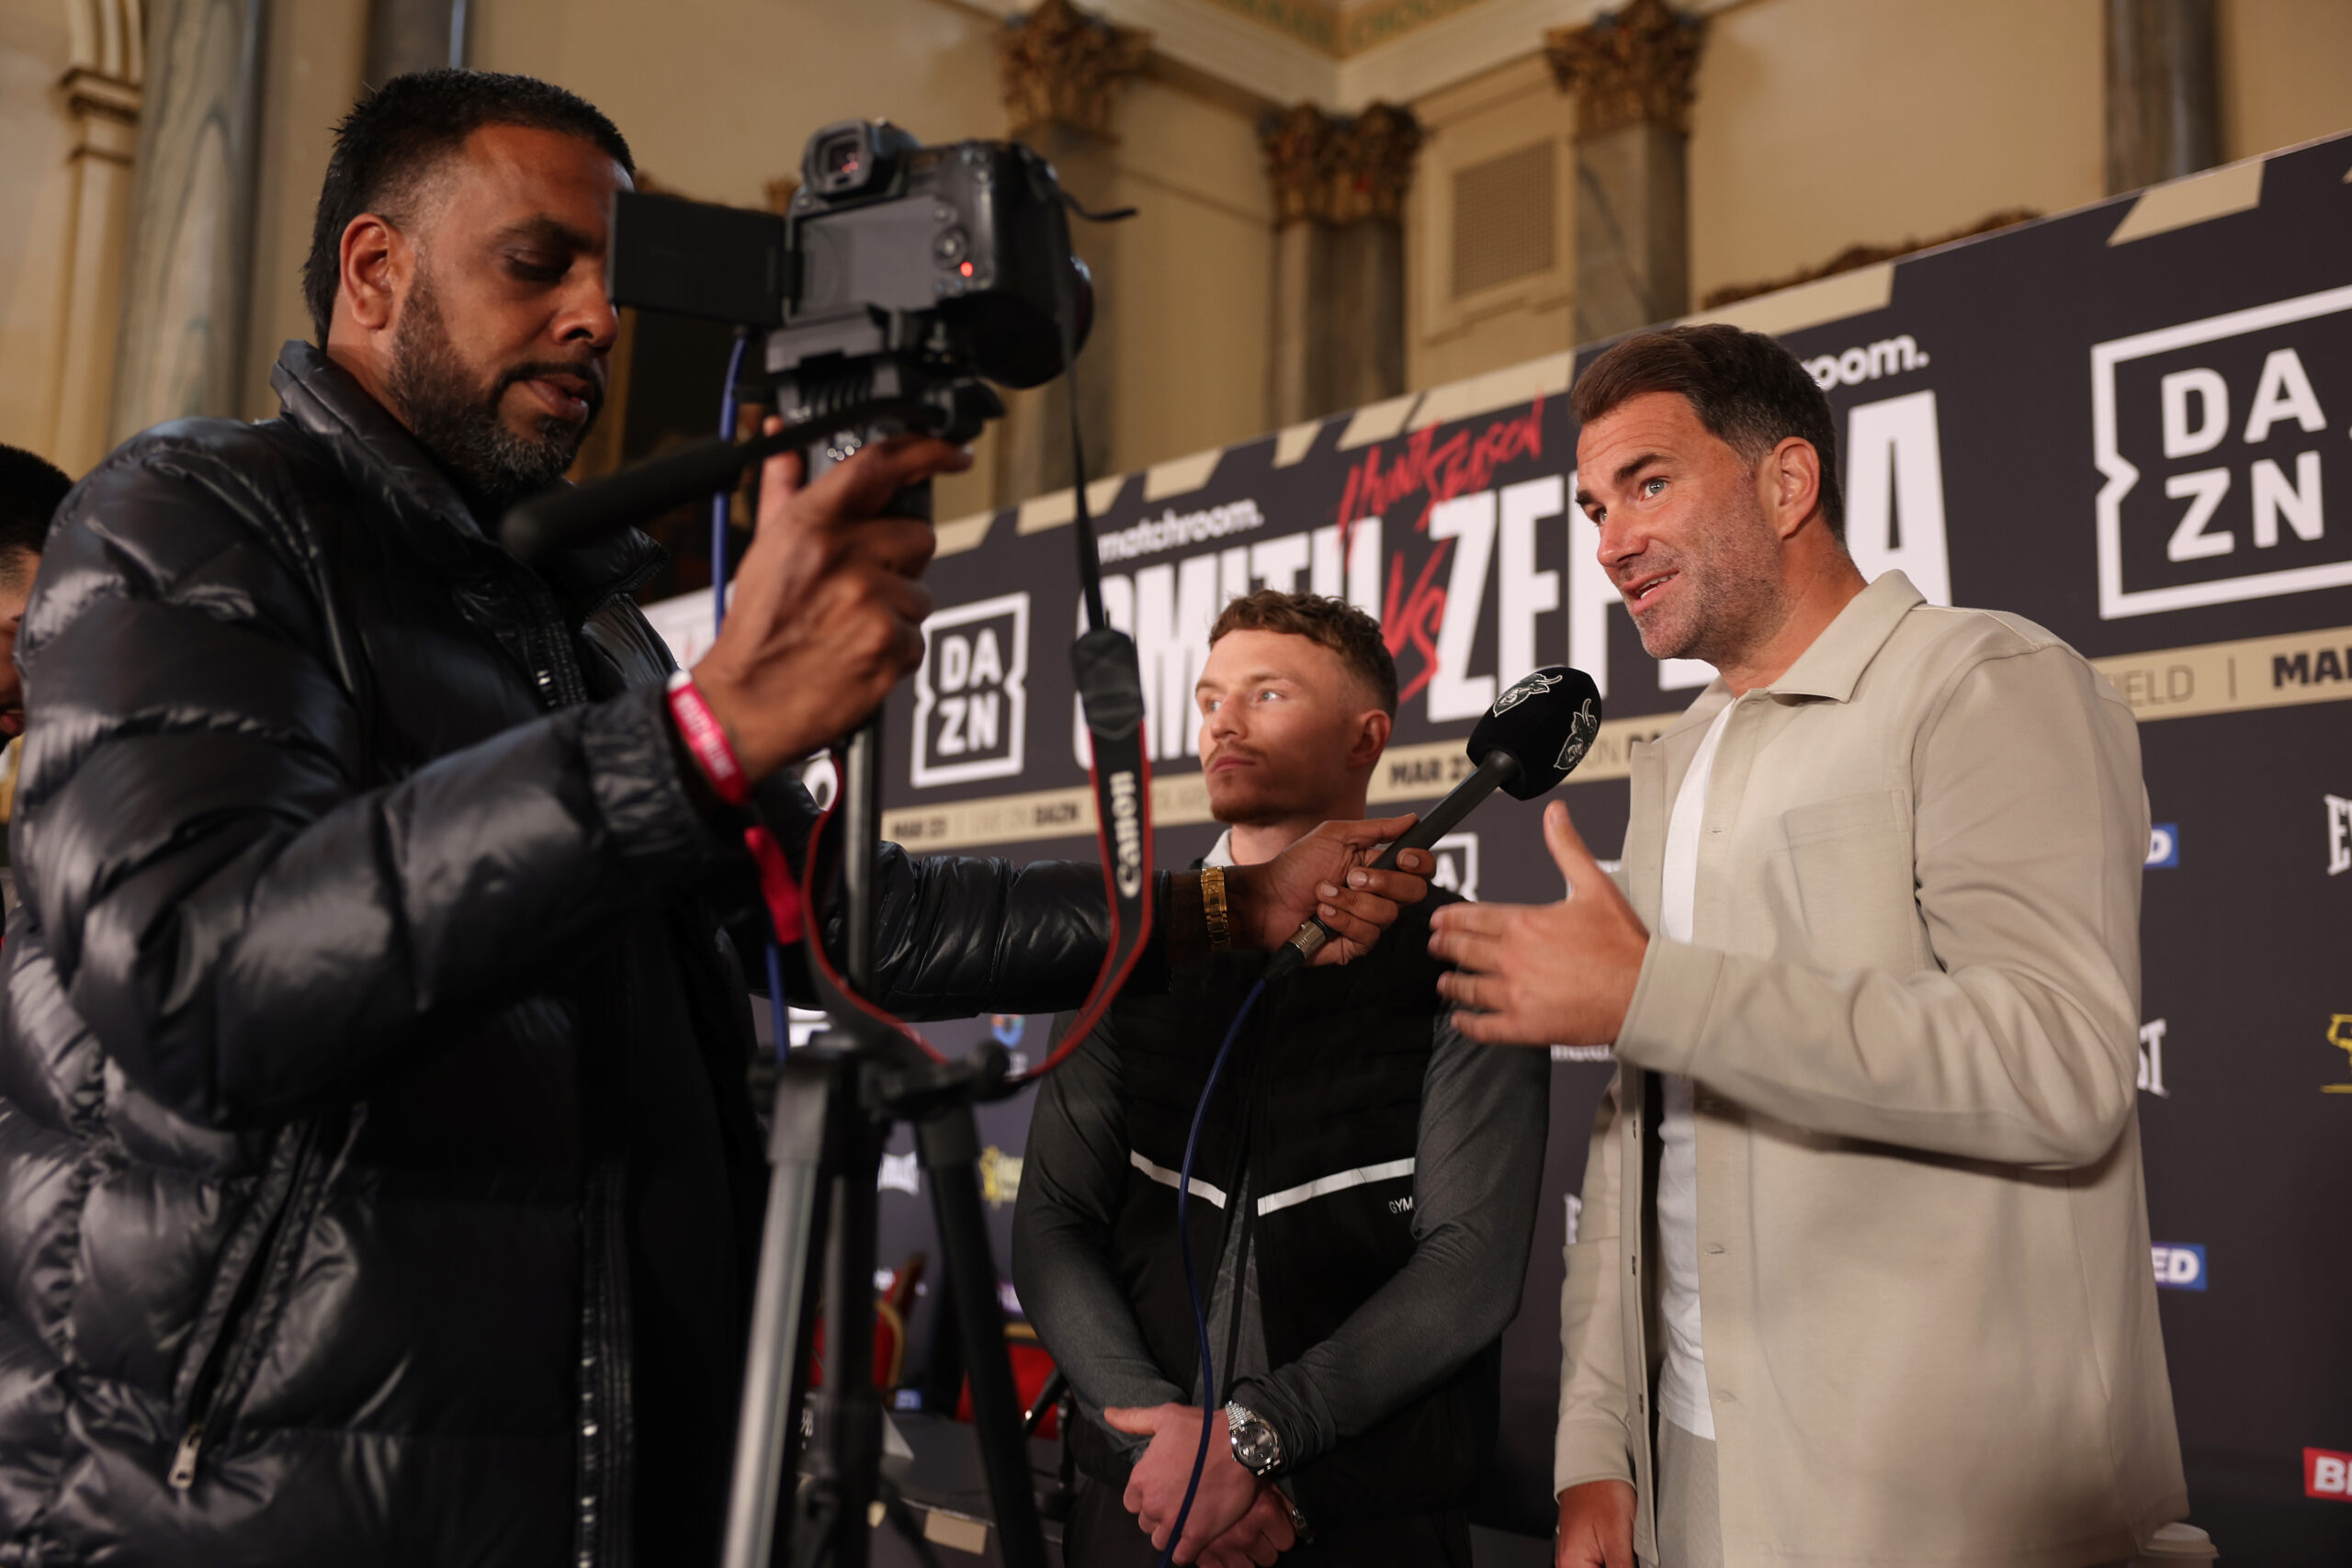 Sheffield, UK: Dalton Smith and Jose Zepeda Final Press Conference ahead of WBC International Super Lightweight Title fight on saturday night.